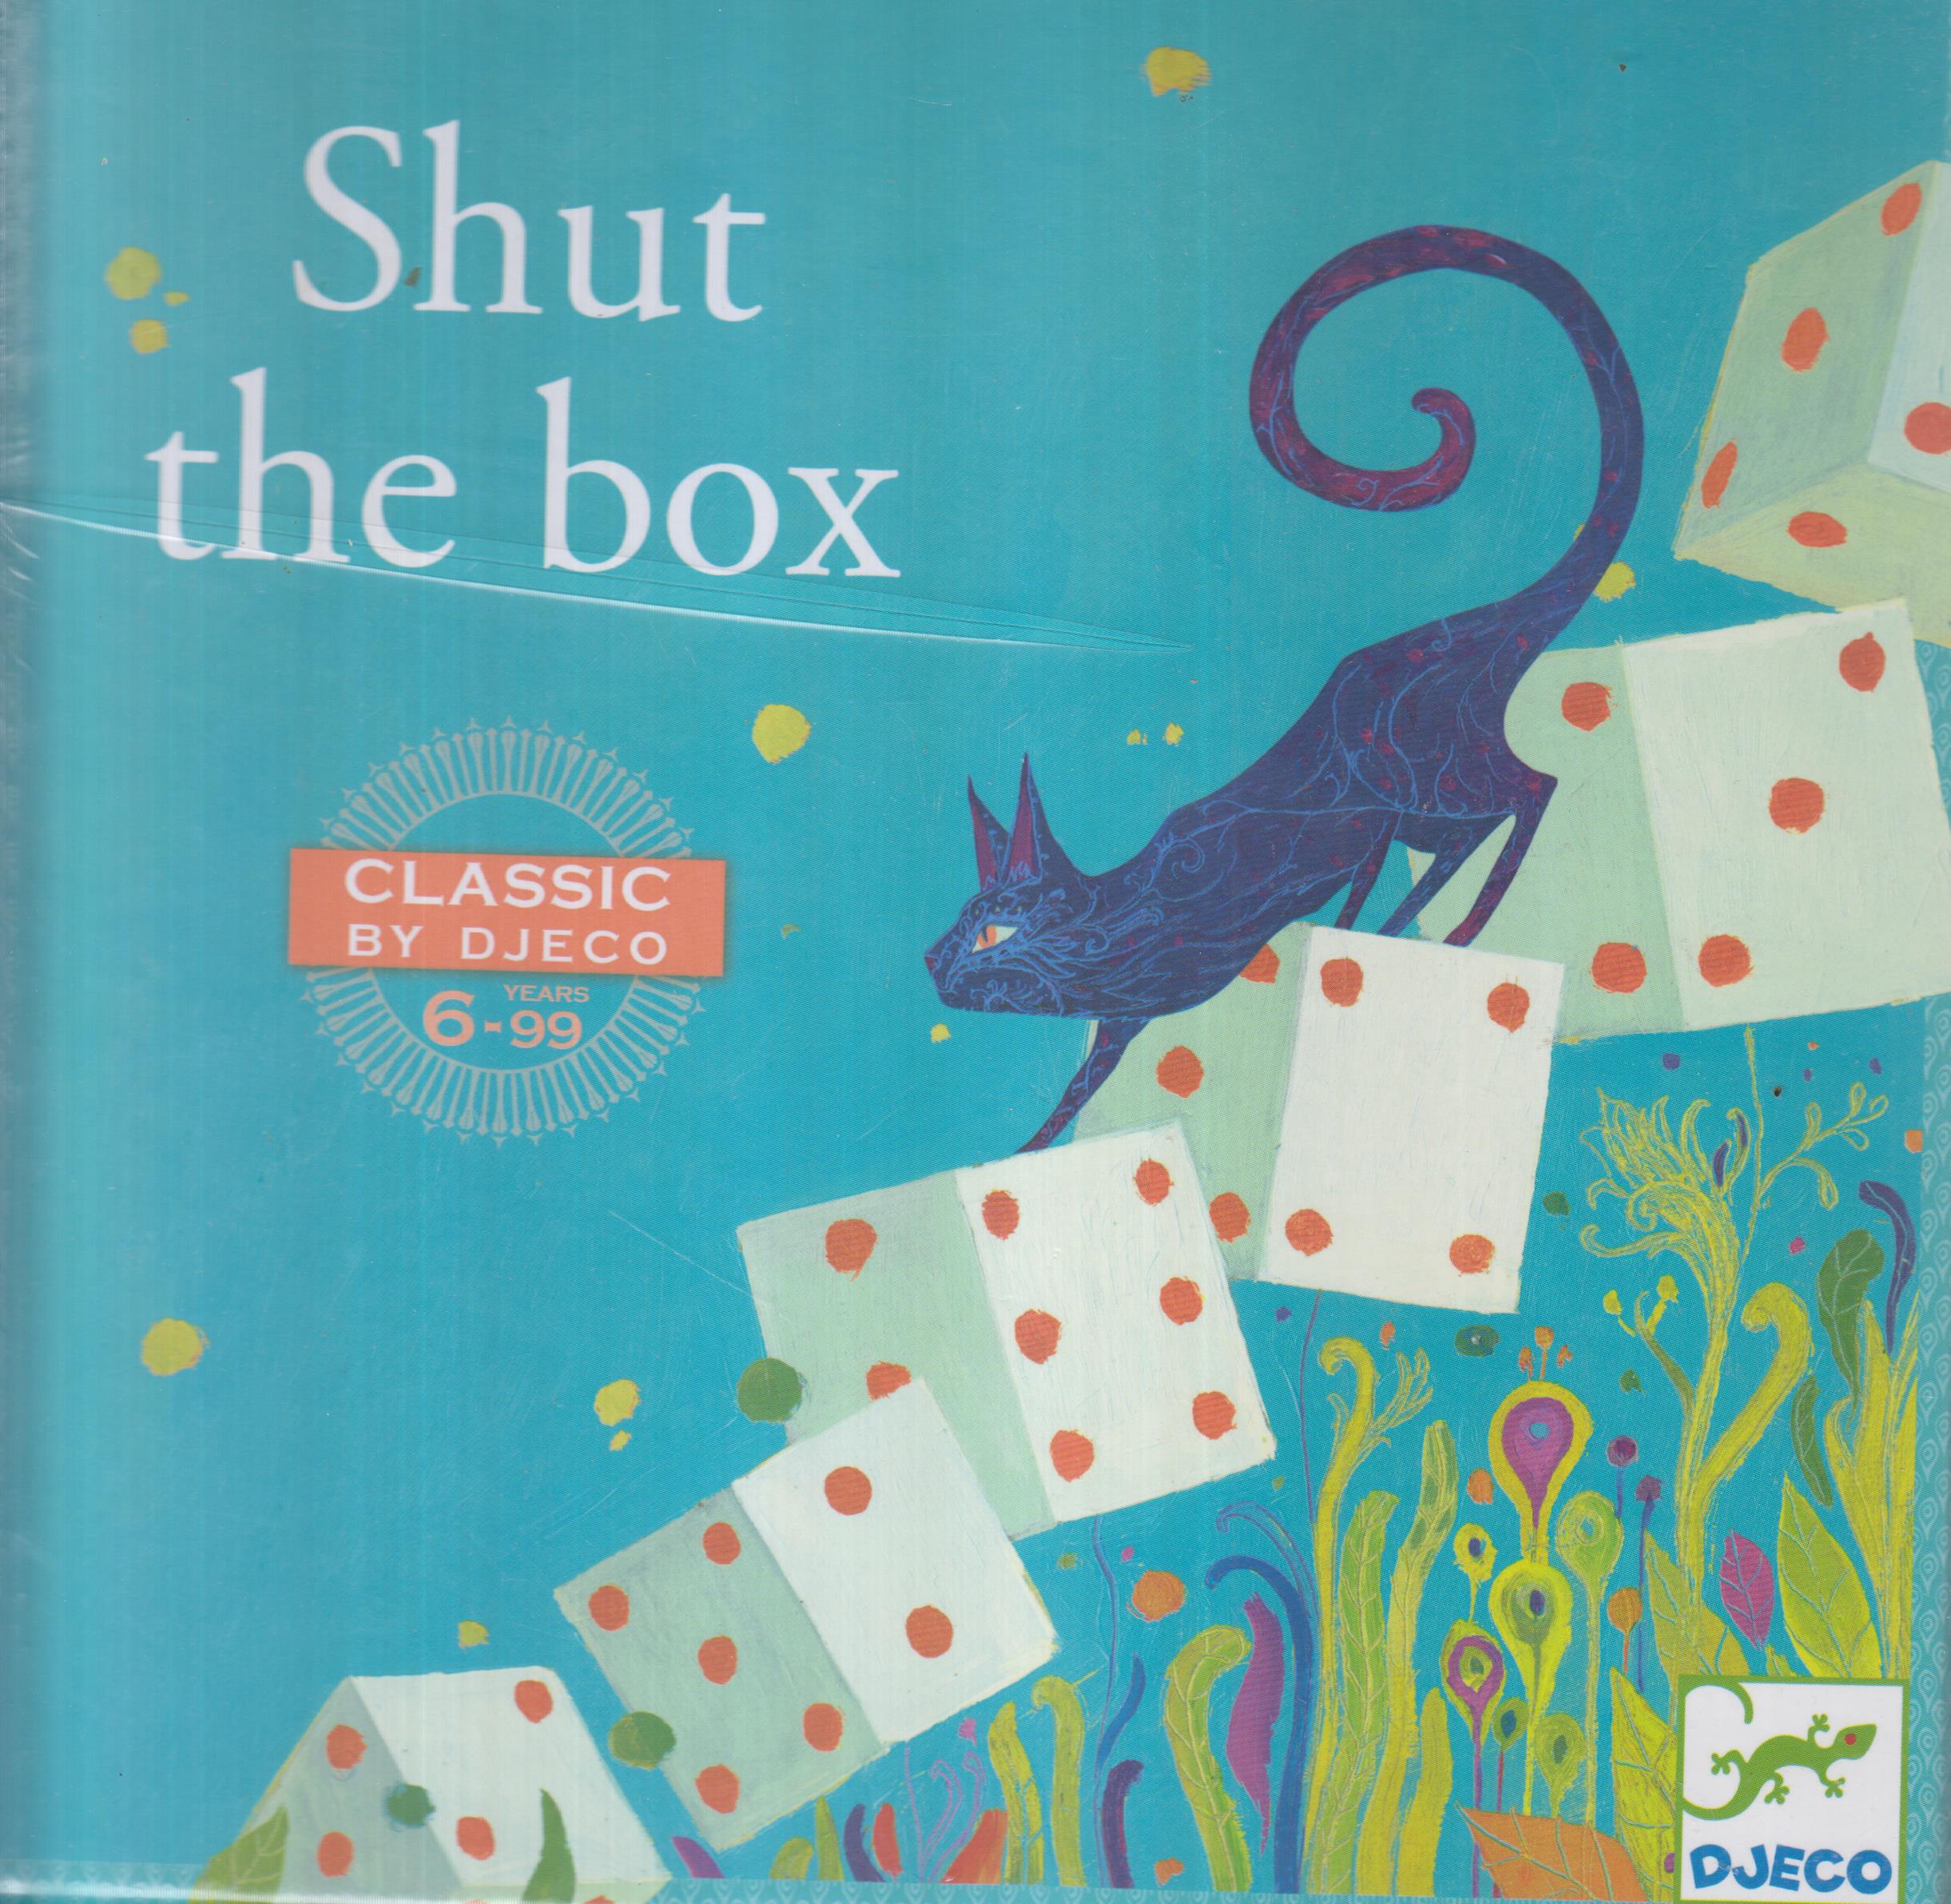 Shut the box – Classic by Djeco